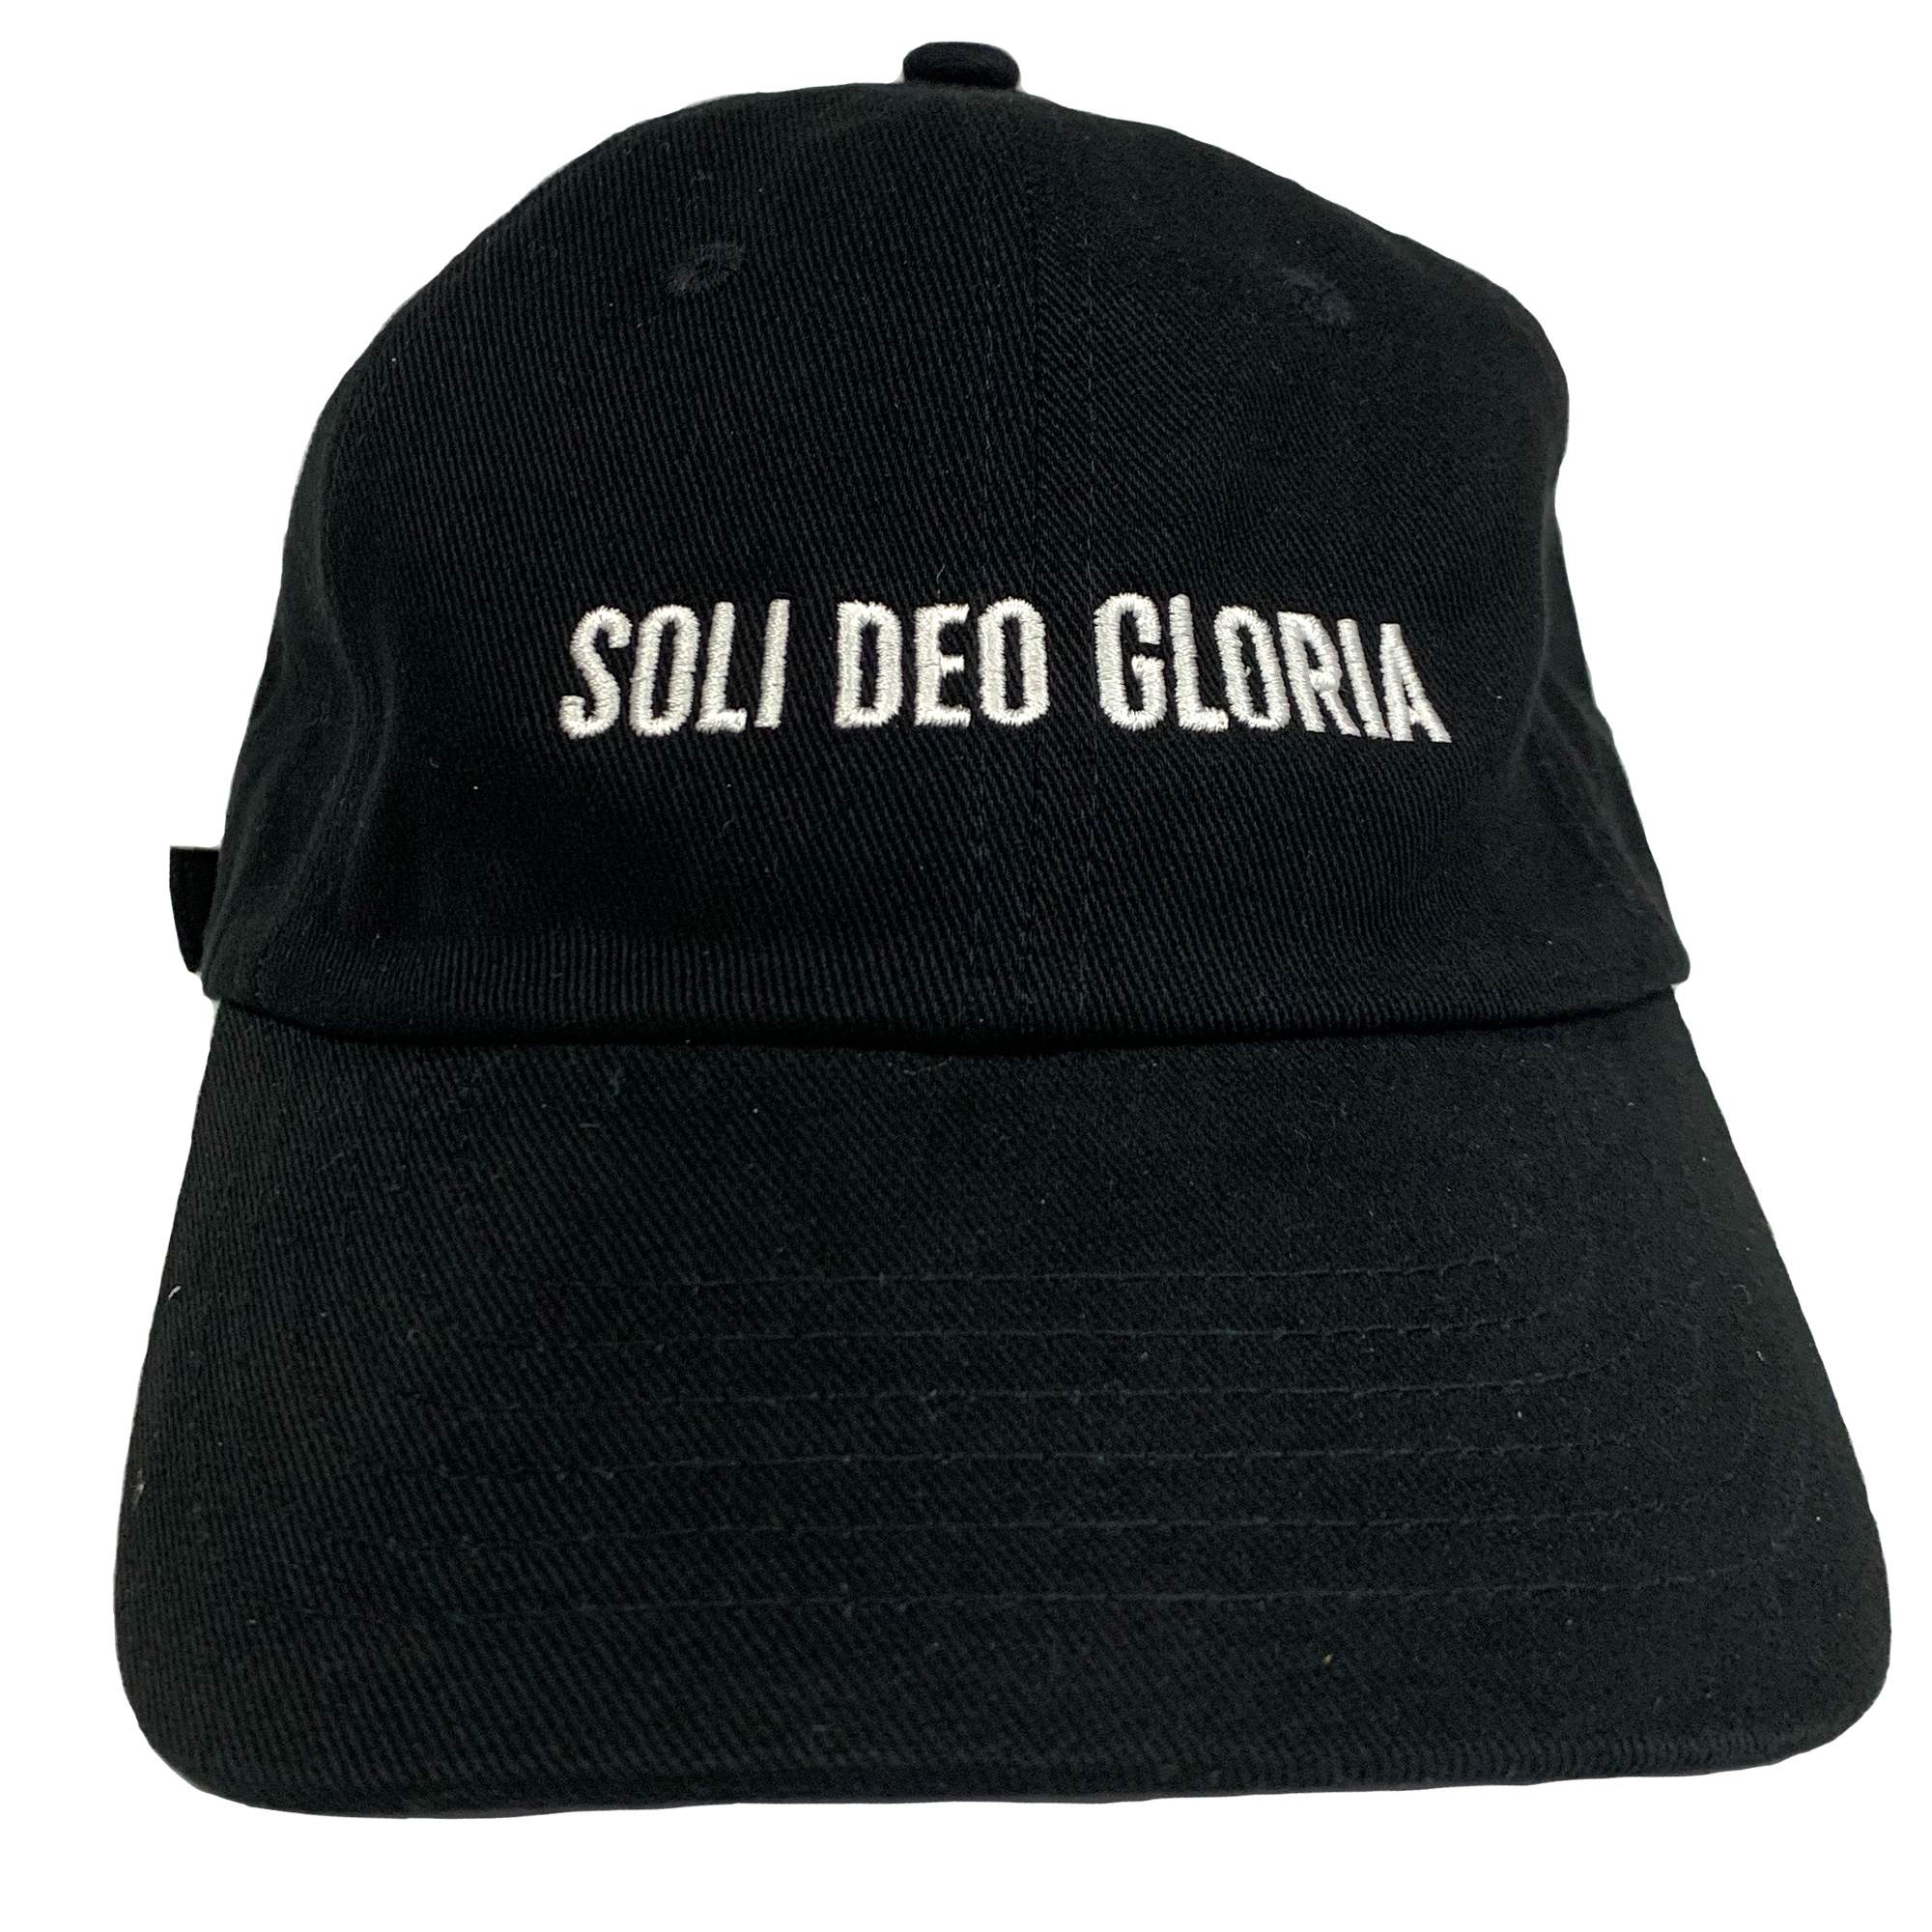 Soli Deo Gloria Hat